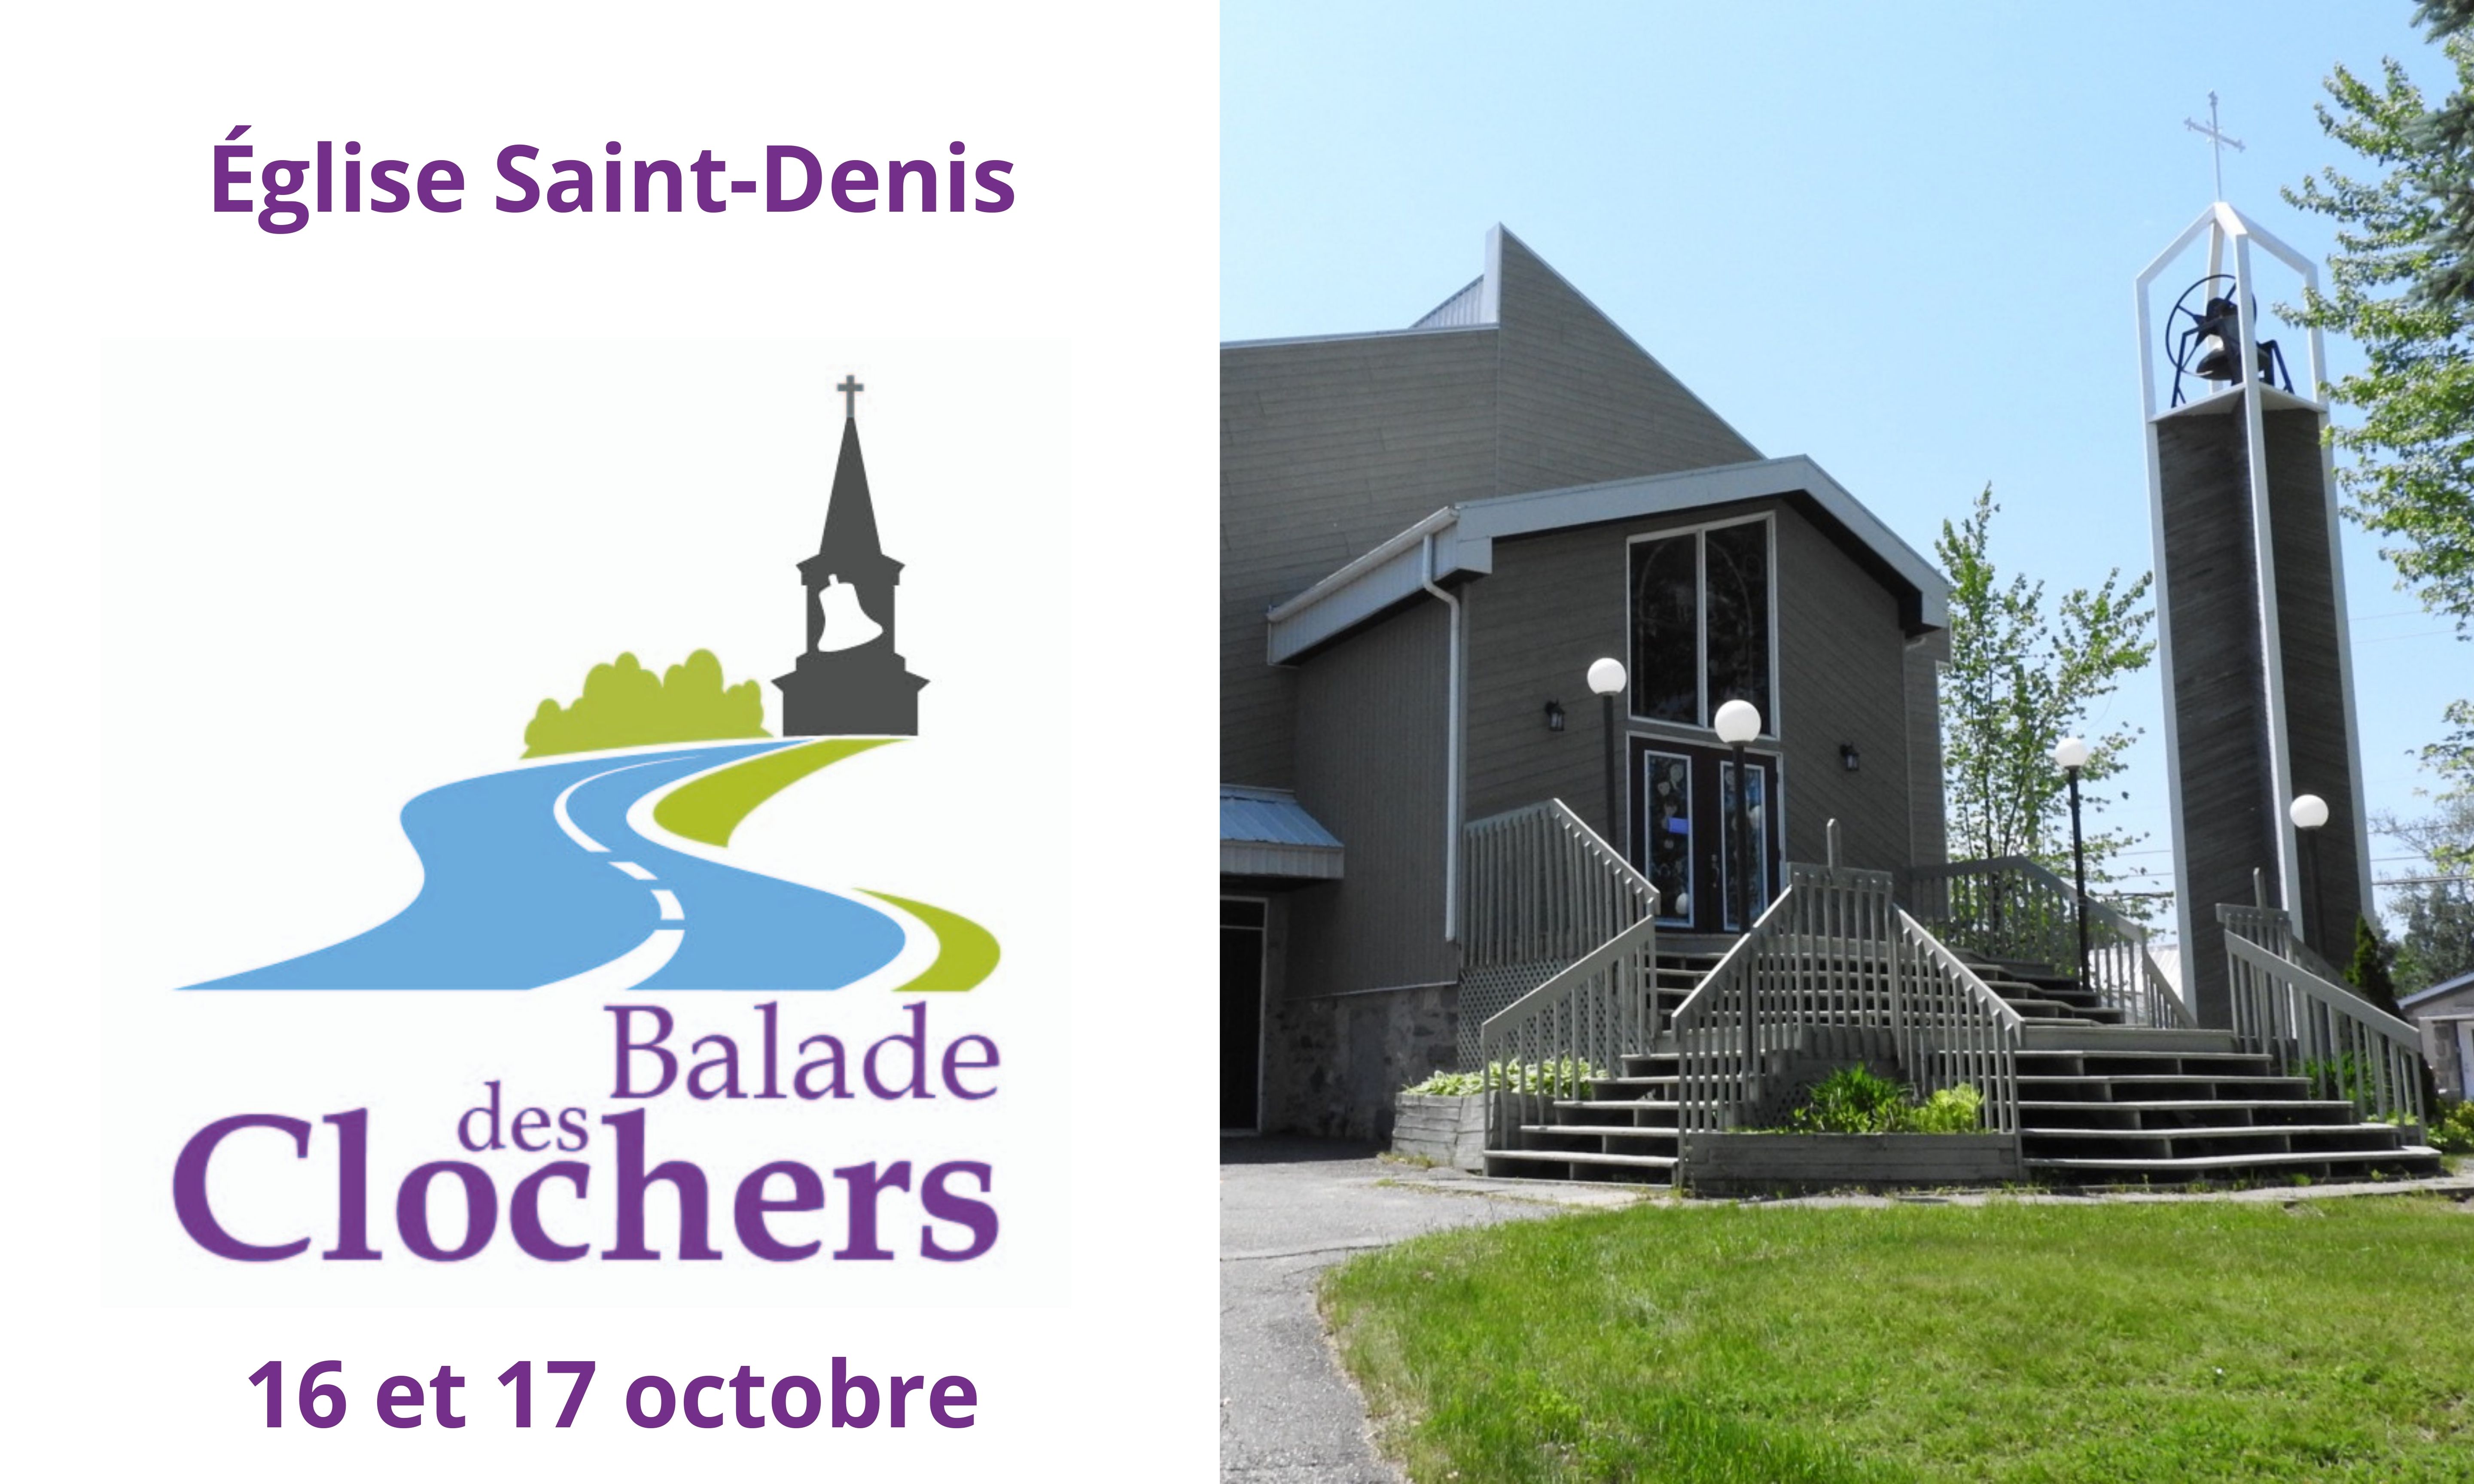 BaladeclochersWEB_St-Denis.jpg